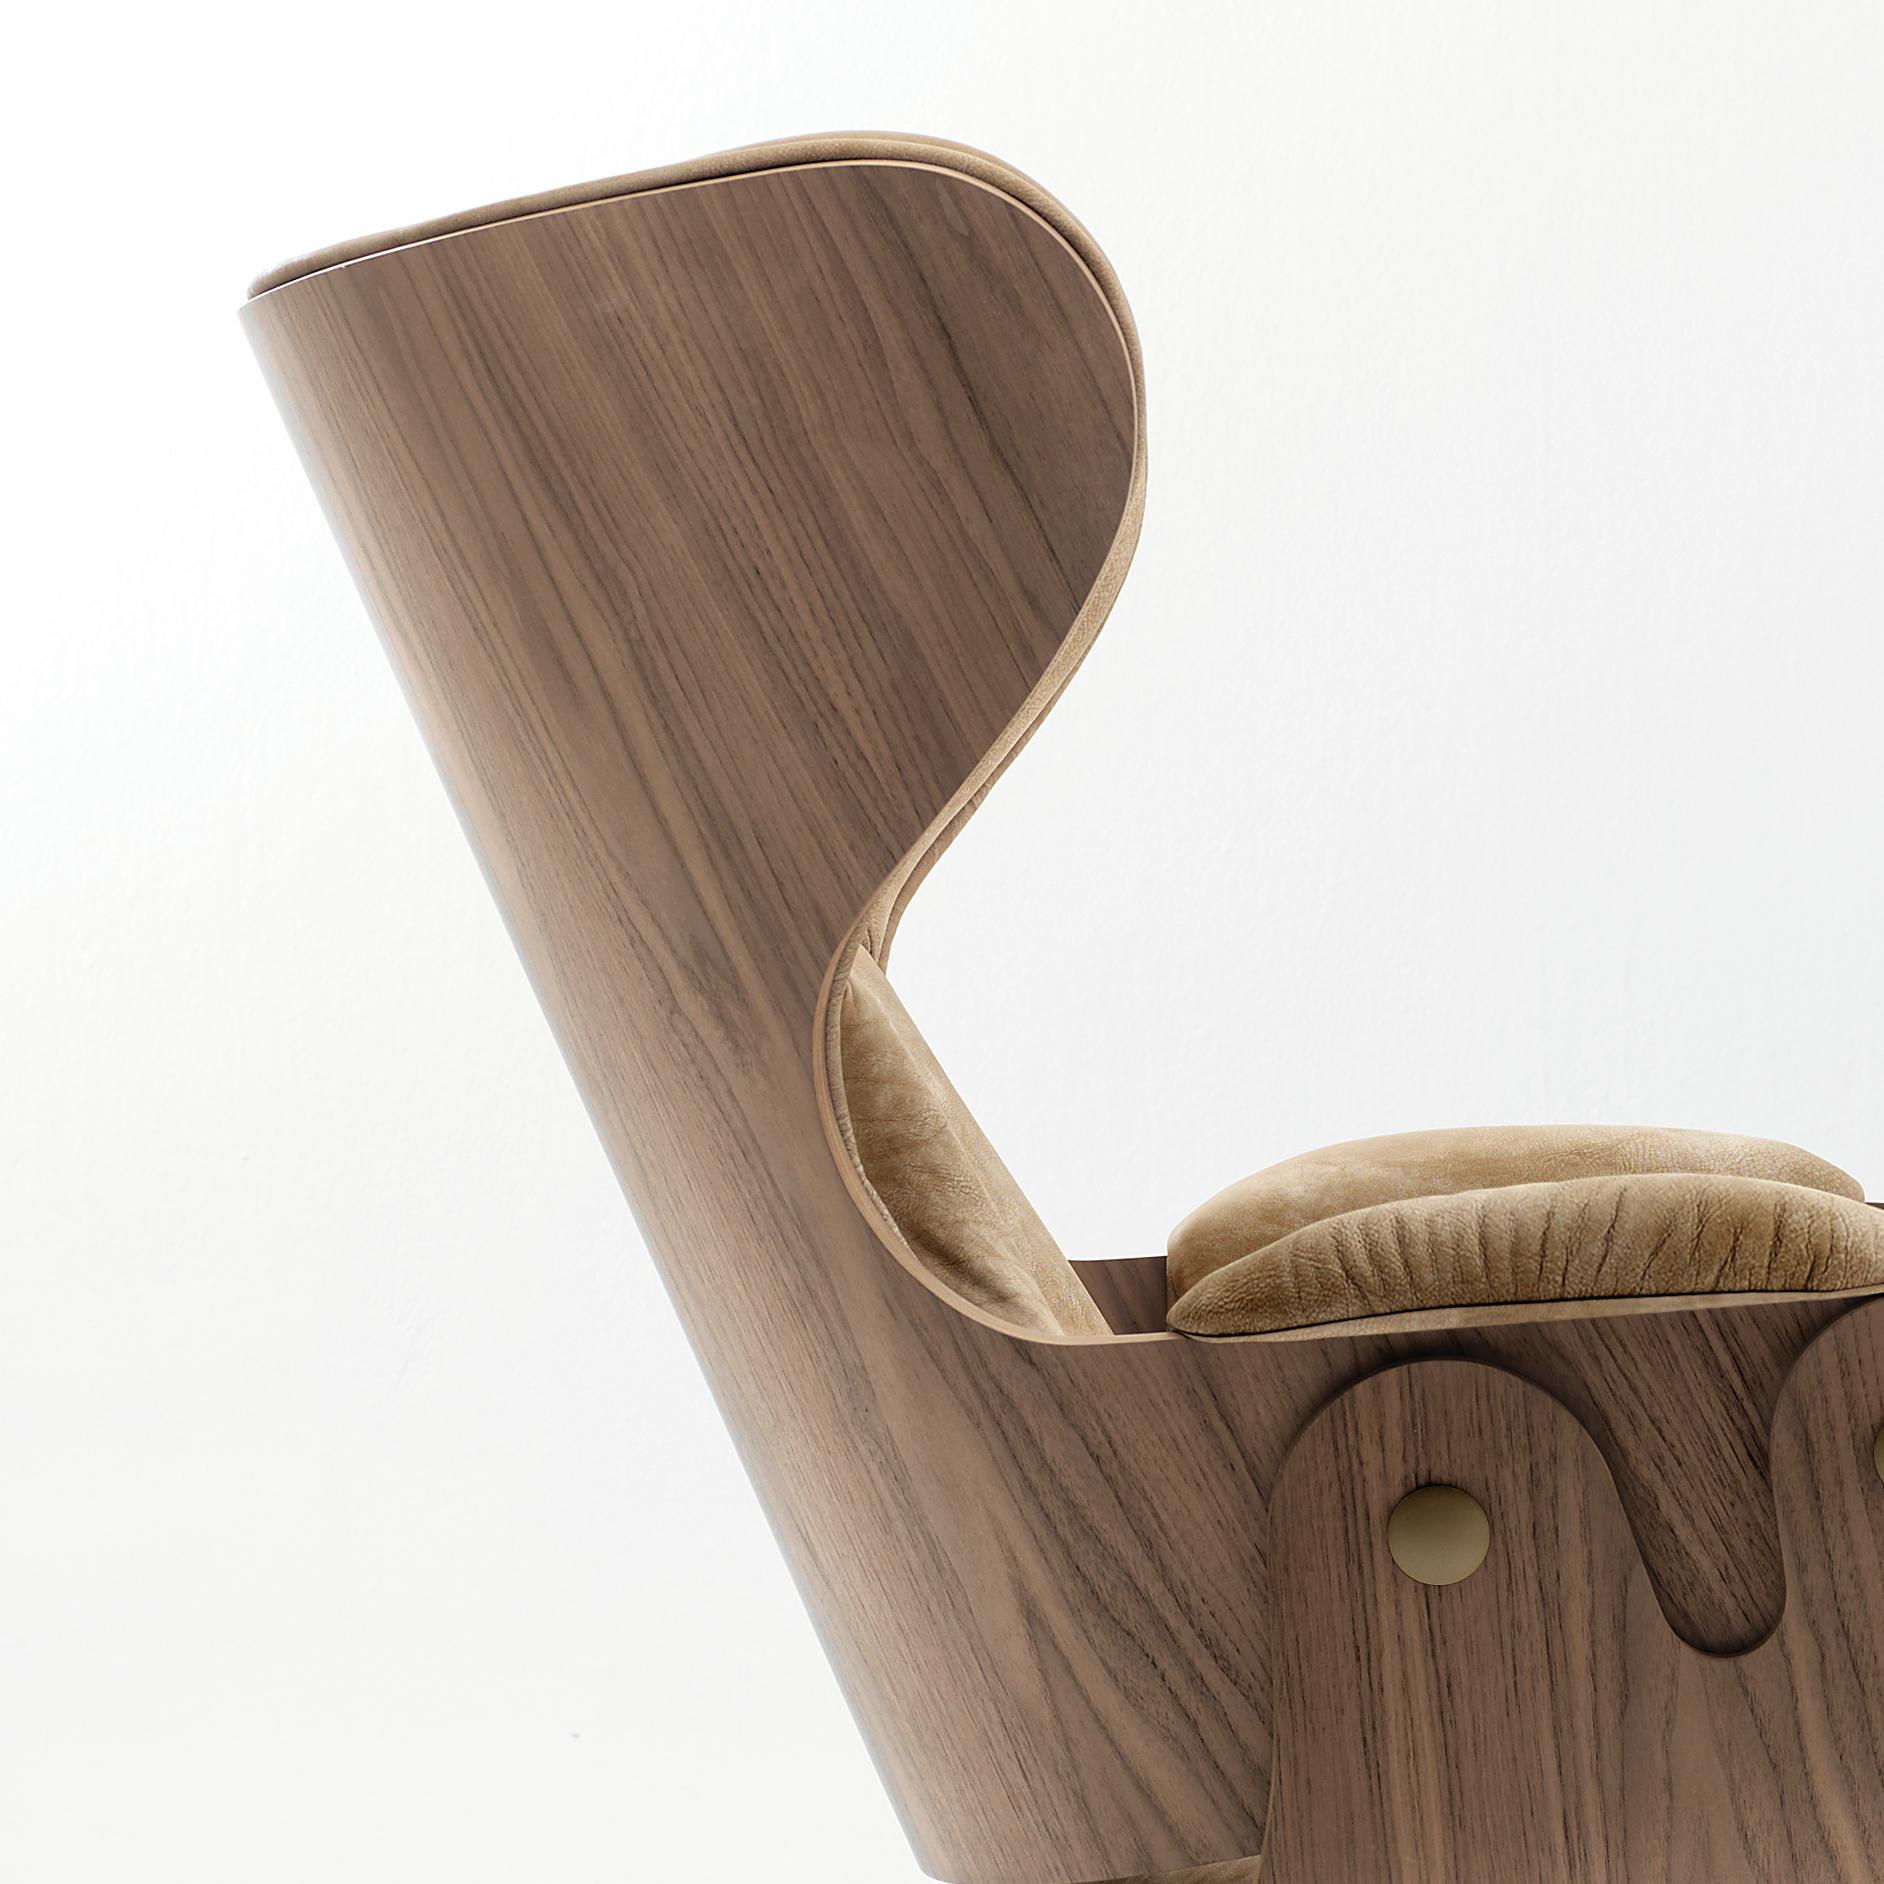 Spanish Jaime Hayon, Contemporary, Playwood Walnut Leather Upholstery Lounger Armchair 